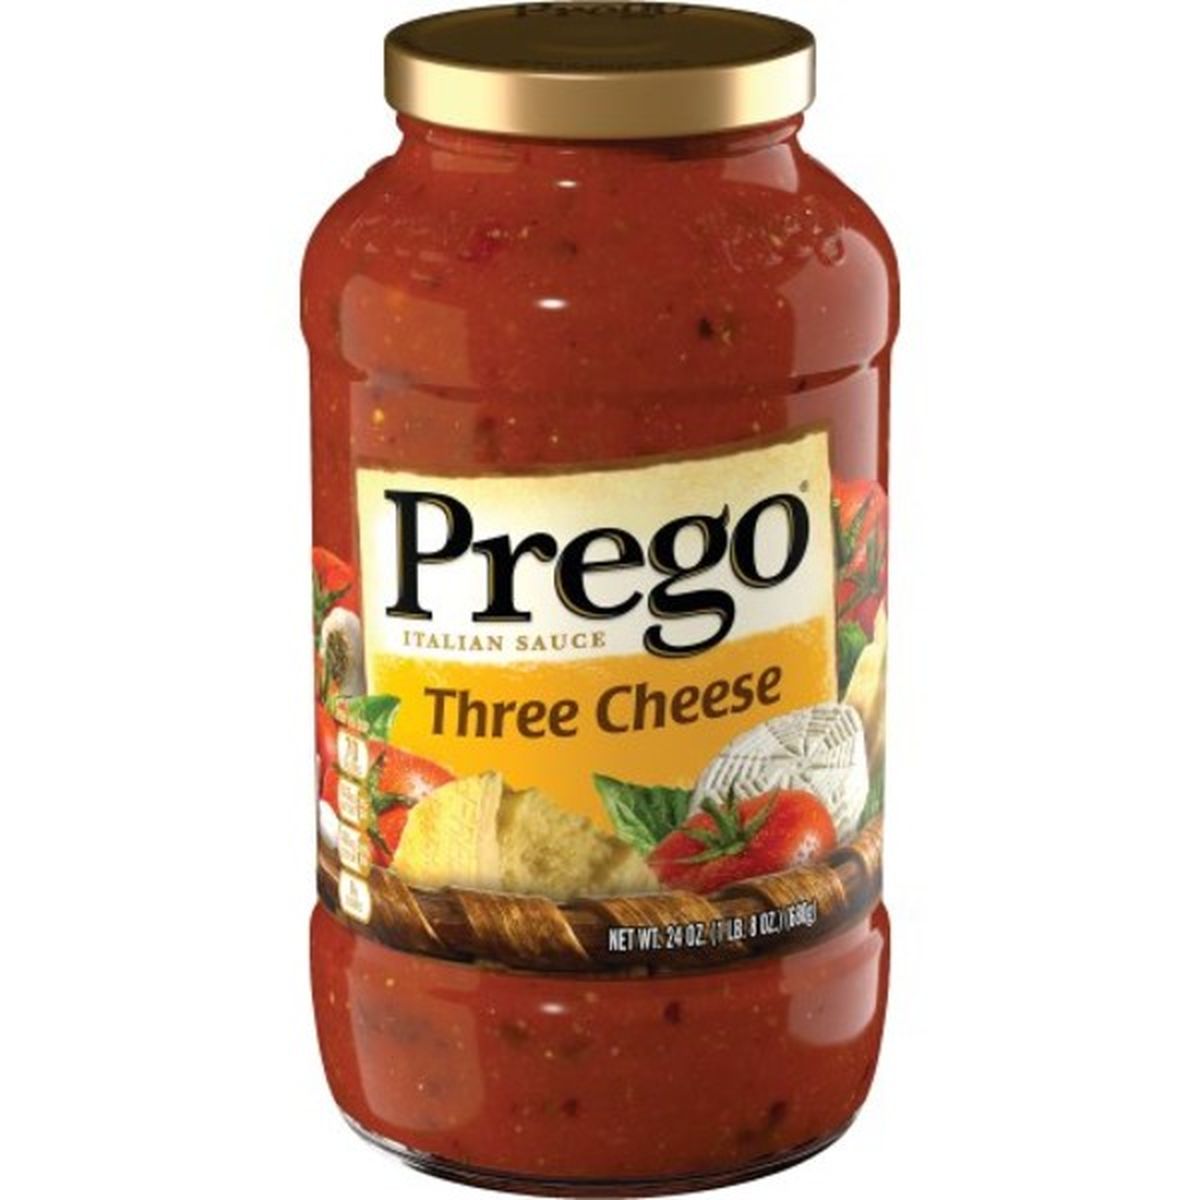 Calories in Pregos Three Cheese Italian Sauce